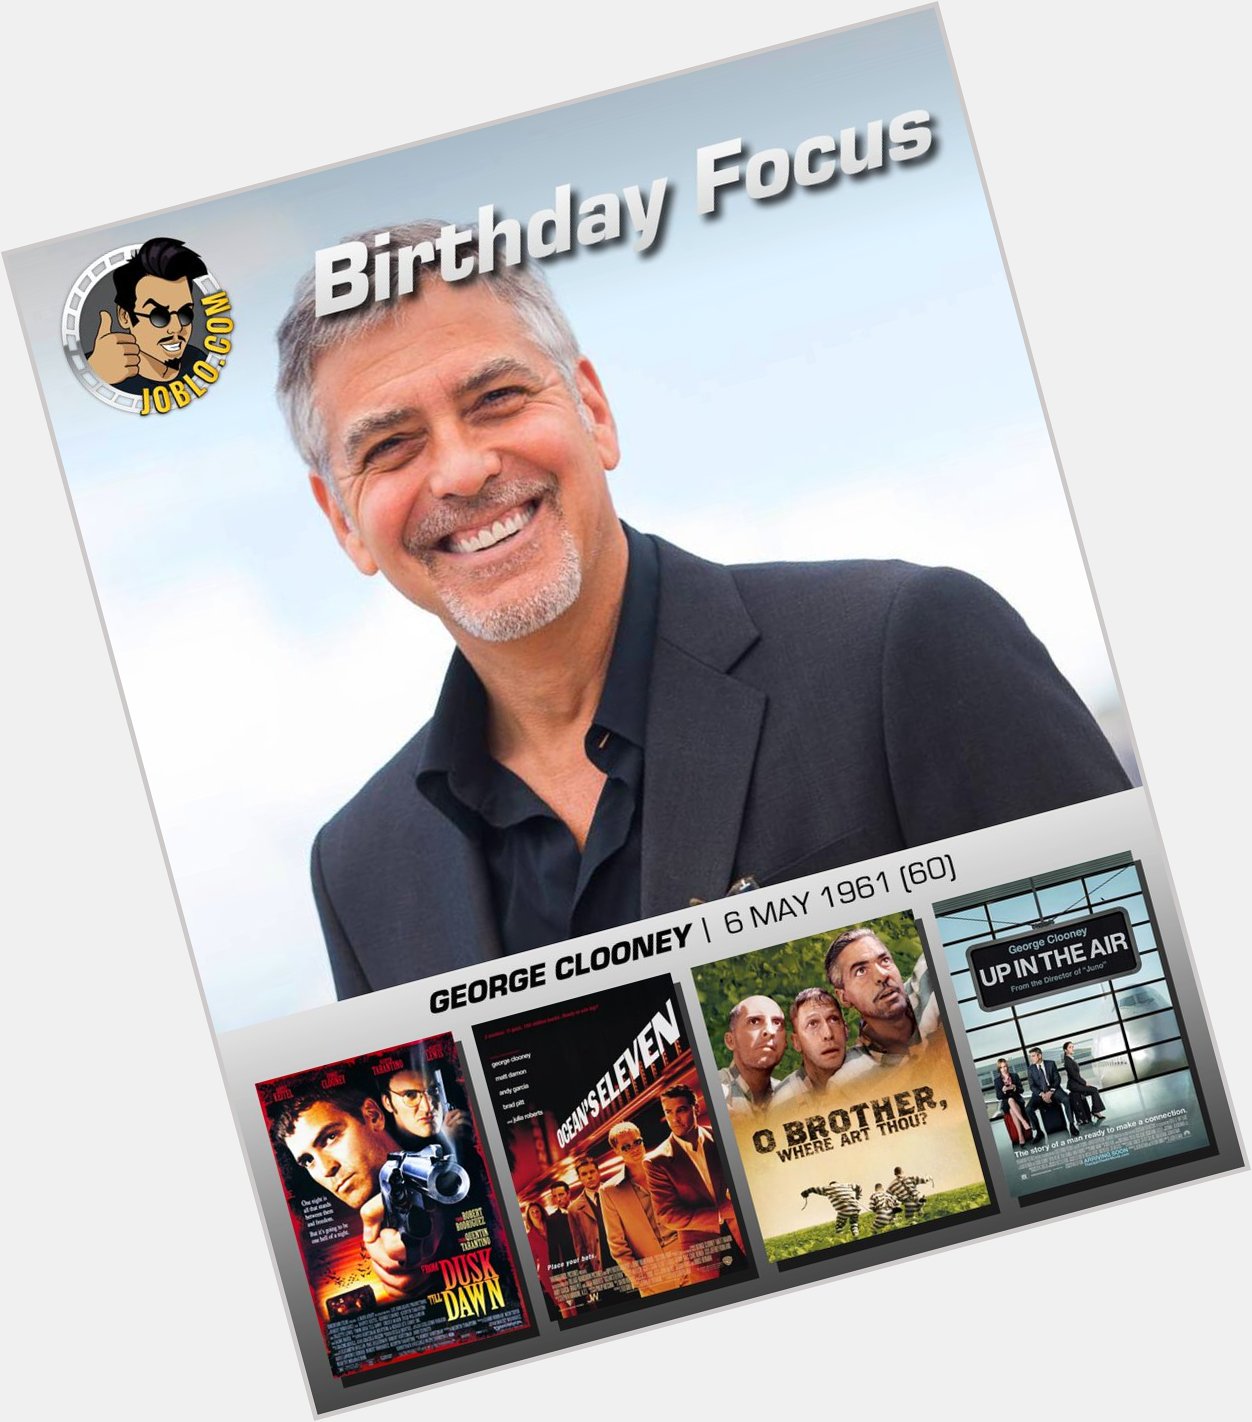 Wishing George Clooney a very happy 60th birthday! 